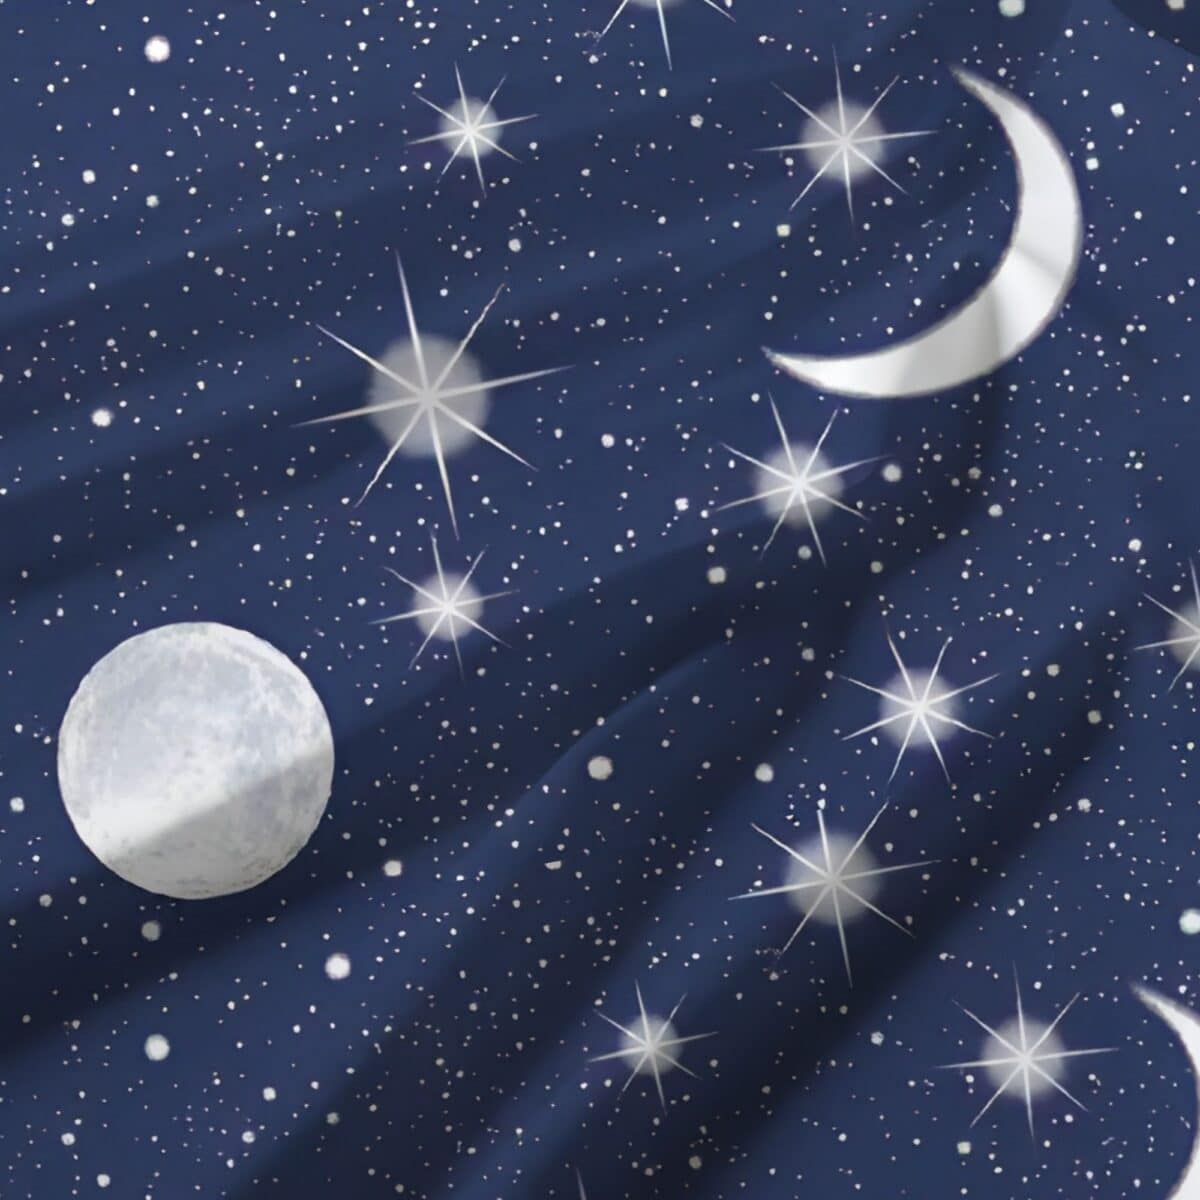 completo-lenzuola-luna-e-stelle-penelope-cotone-fantasia-tessuto-letto